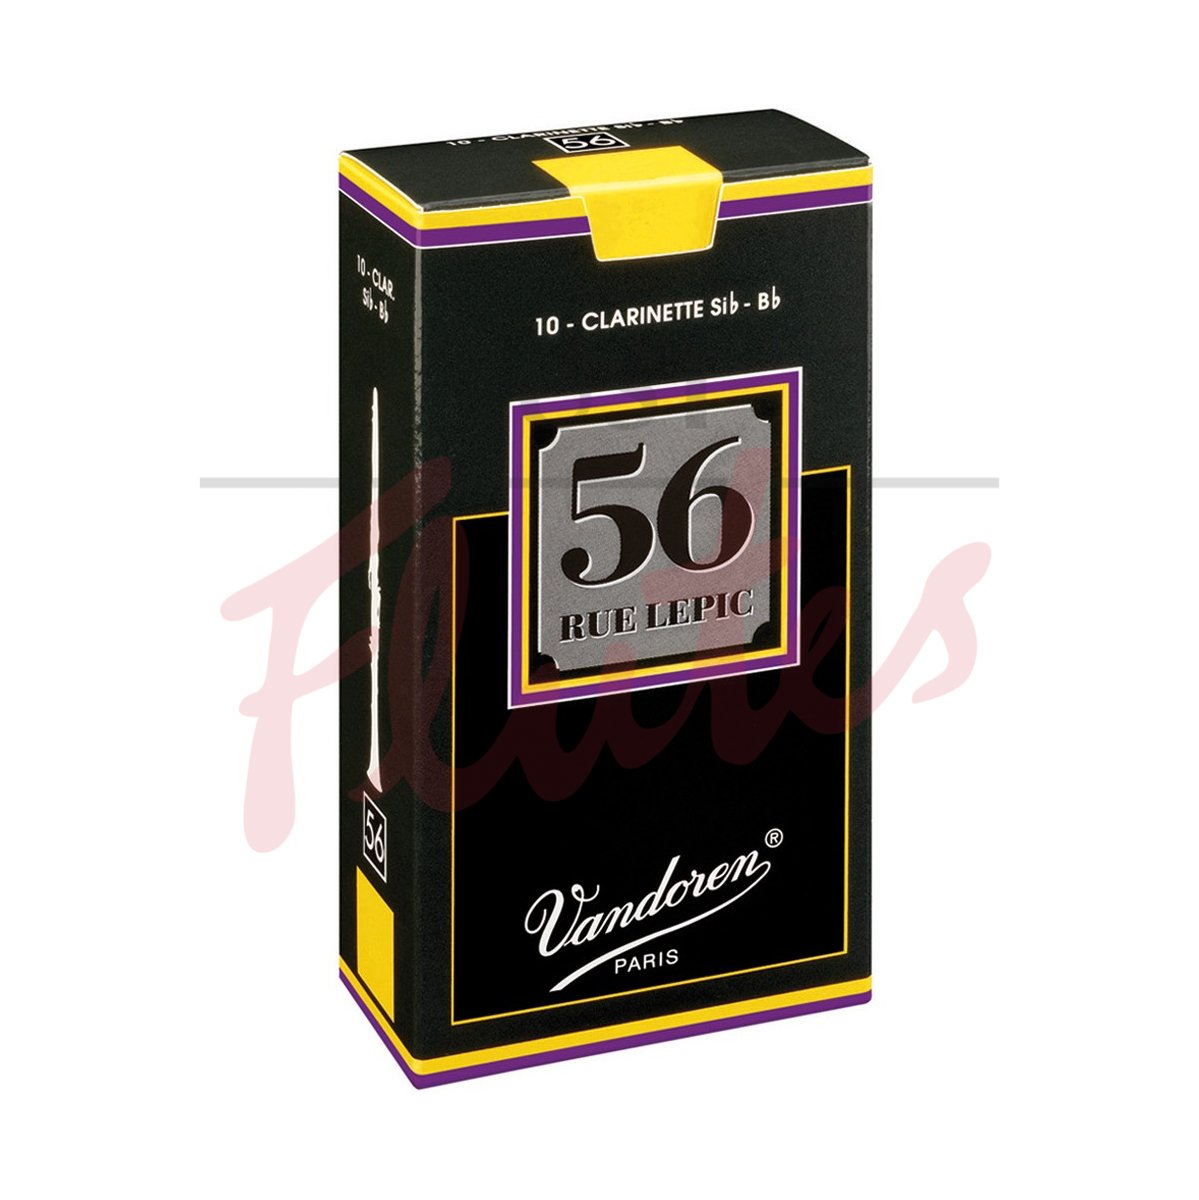 Vandoren CR5035+ 56 Rue Lepic Clarinet Strength 3.5+ Reeds, 10-pack